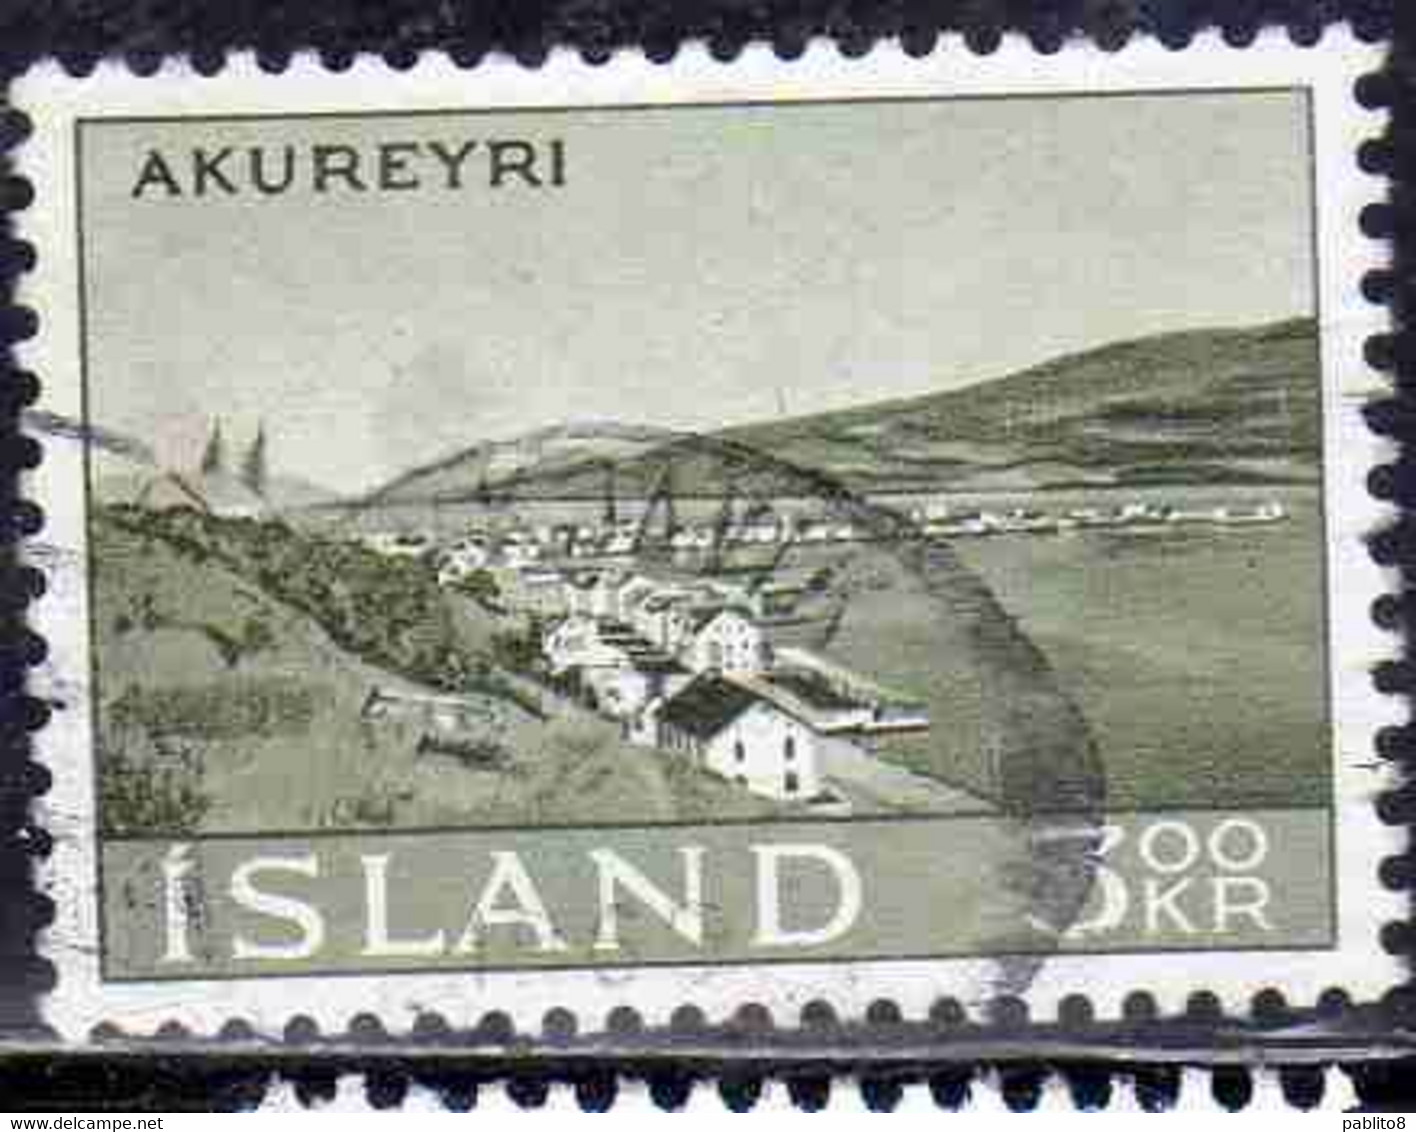 ISLANDA ICELAND ISLANDE ISLAND 1963 VIEW OF AKUREYRI 3k USED USATO OBLITERE' - Used Stamps